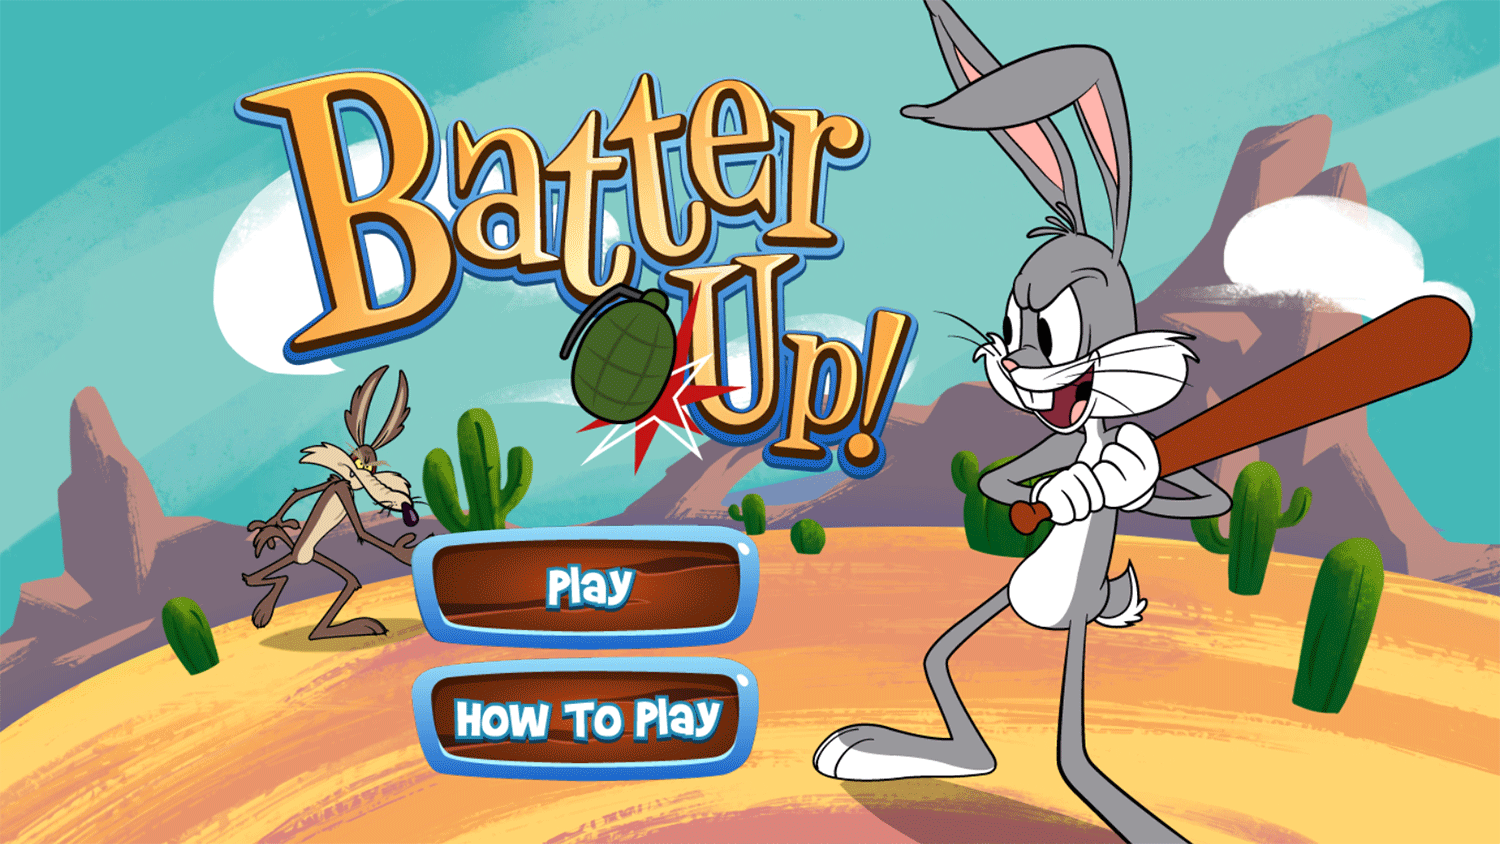 Bugs Bunny Batter Up Welcome Screen Screenshot.